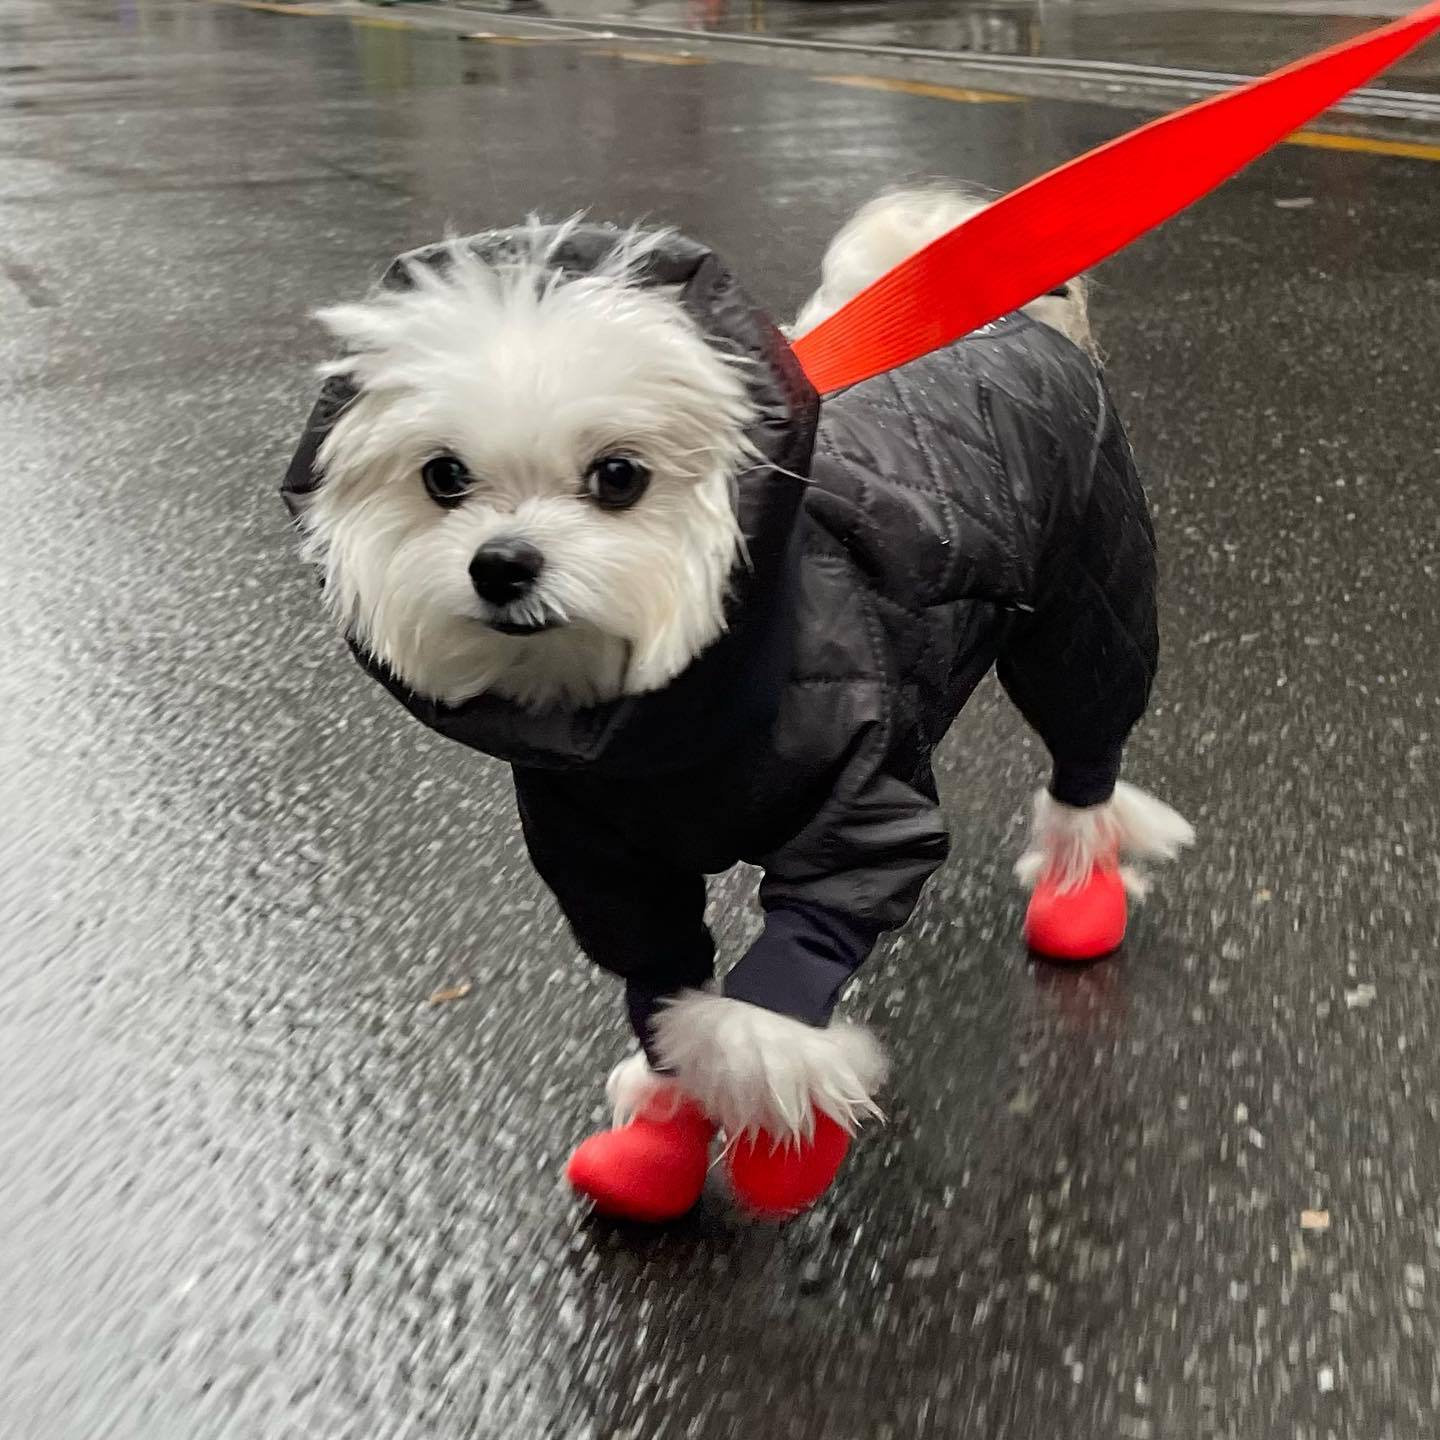 Waterproof Anti-slip Silicone Dog Rain Boots